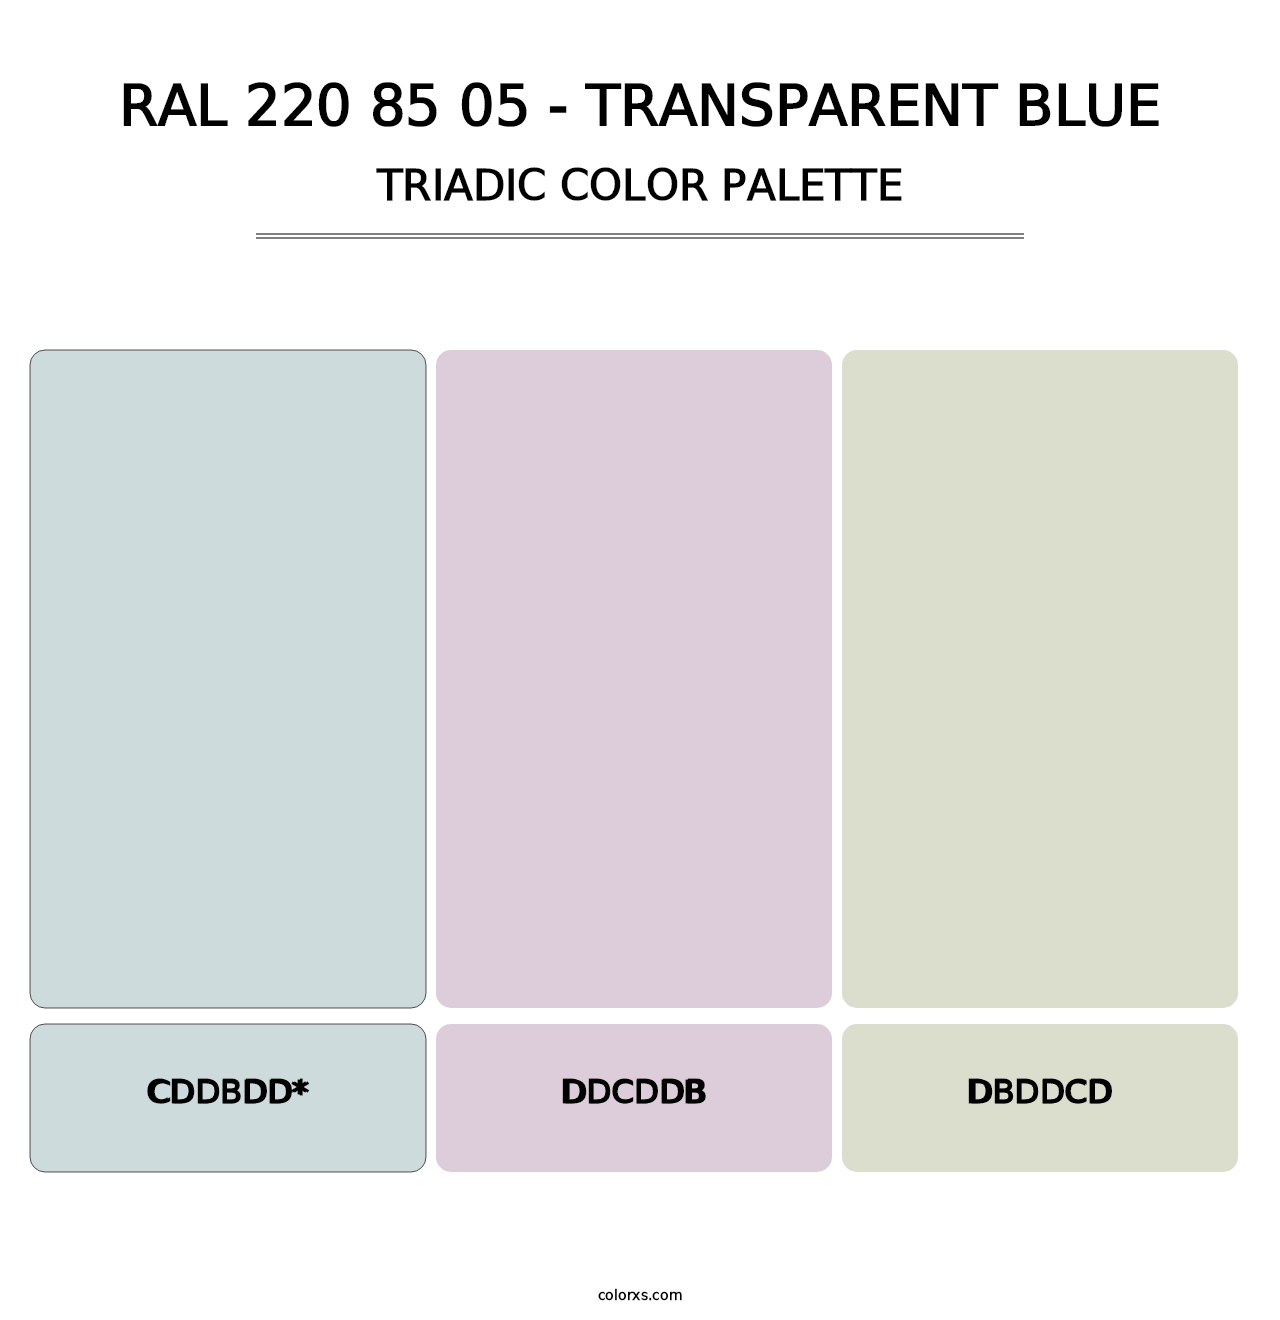 RAL 220 85 05 - Transparent Blue - Triadic Color Palette